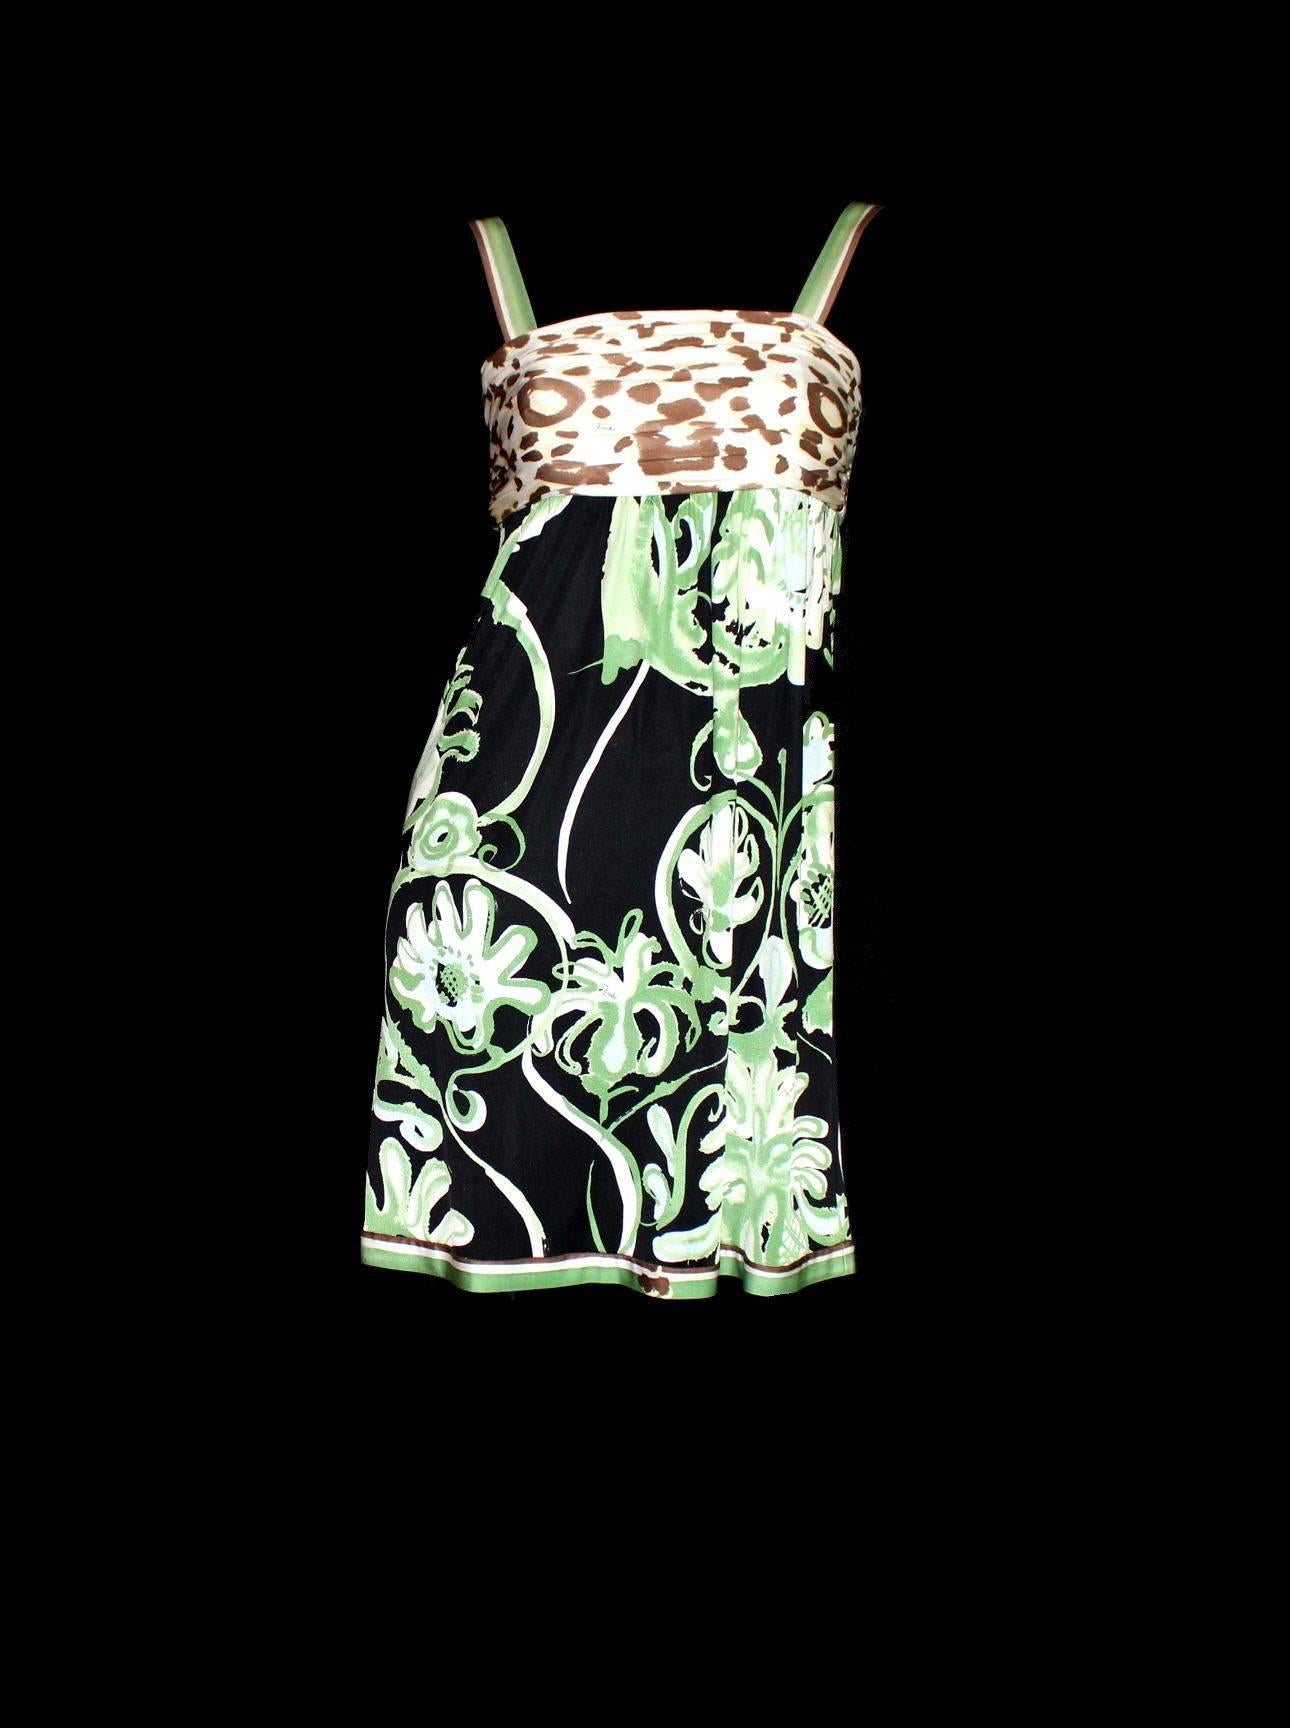 NEW Emilio Pucci Silk Jungle Cheetah Animal Floral Botanical Print Dress 42 For Sale 1